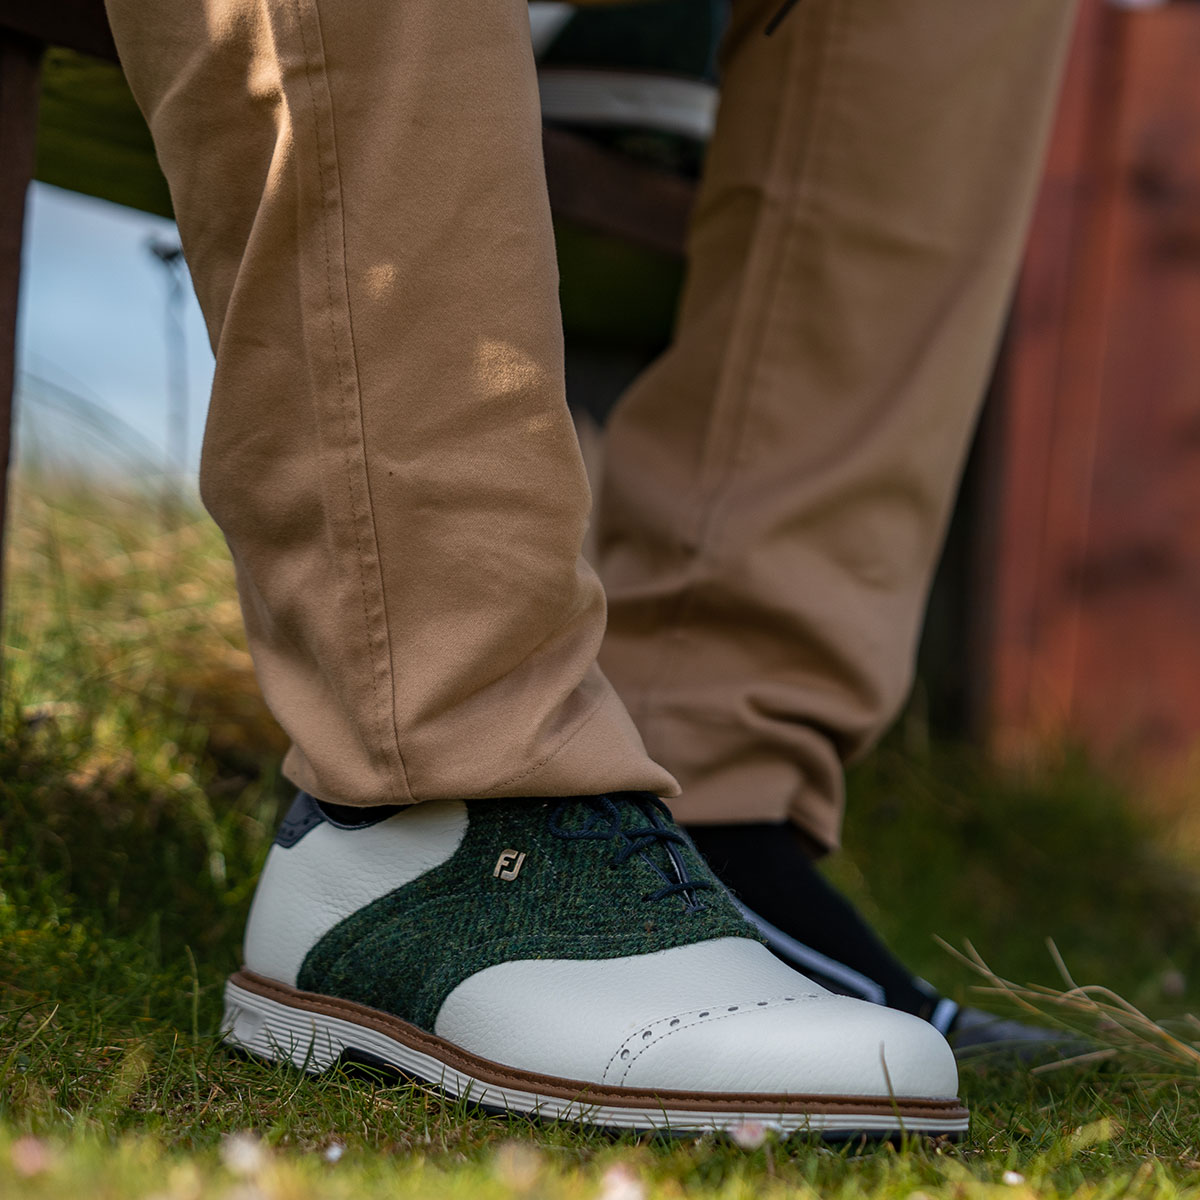 FootJoy Men's DryJoys Premiere Series Wilcox Golf Shoes